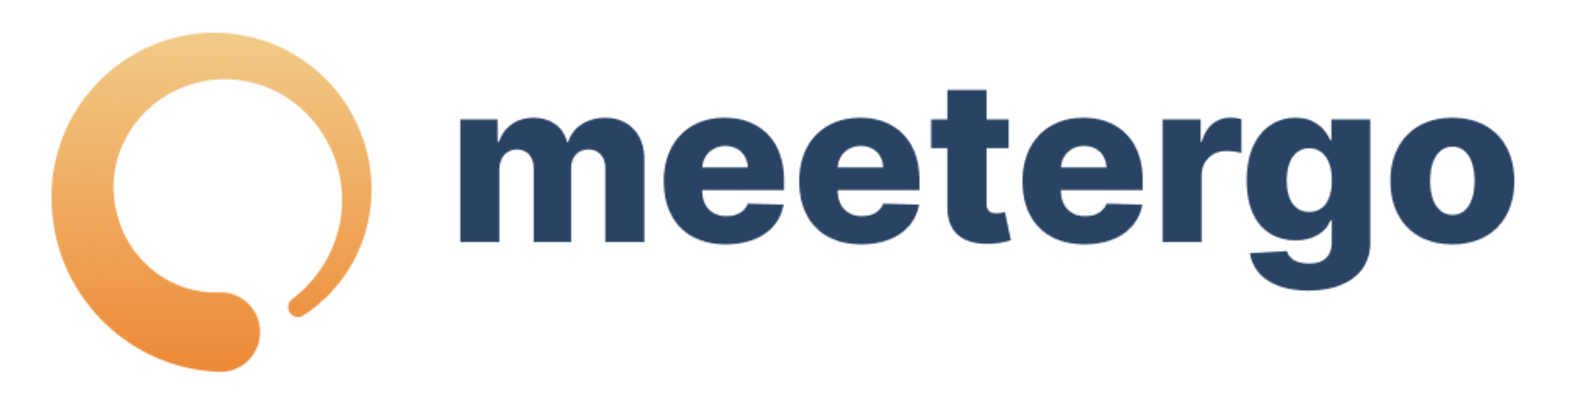 meetergo logo